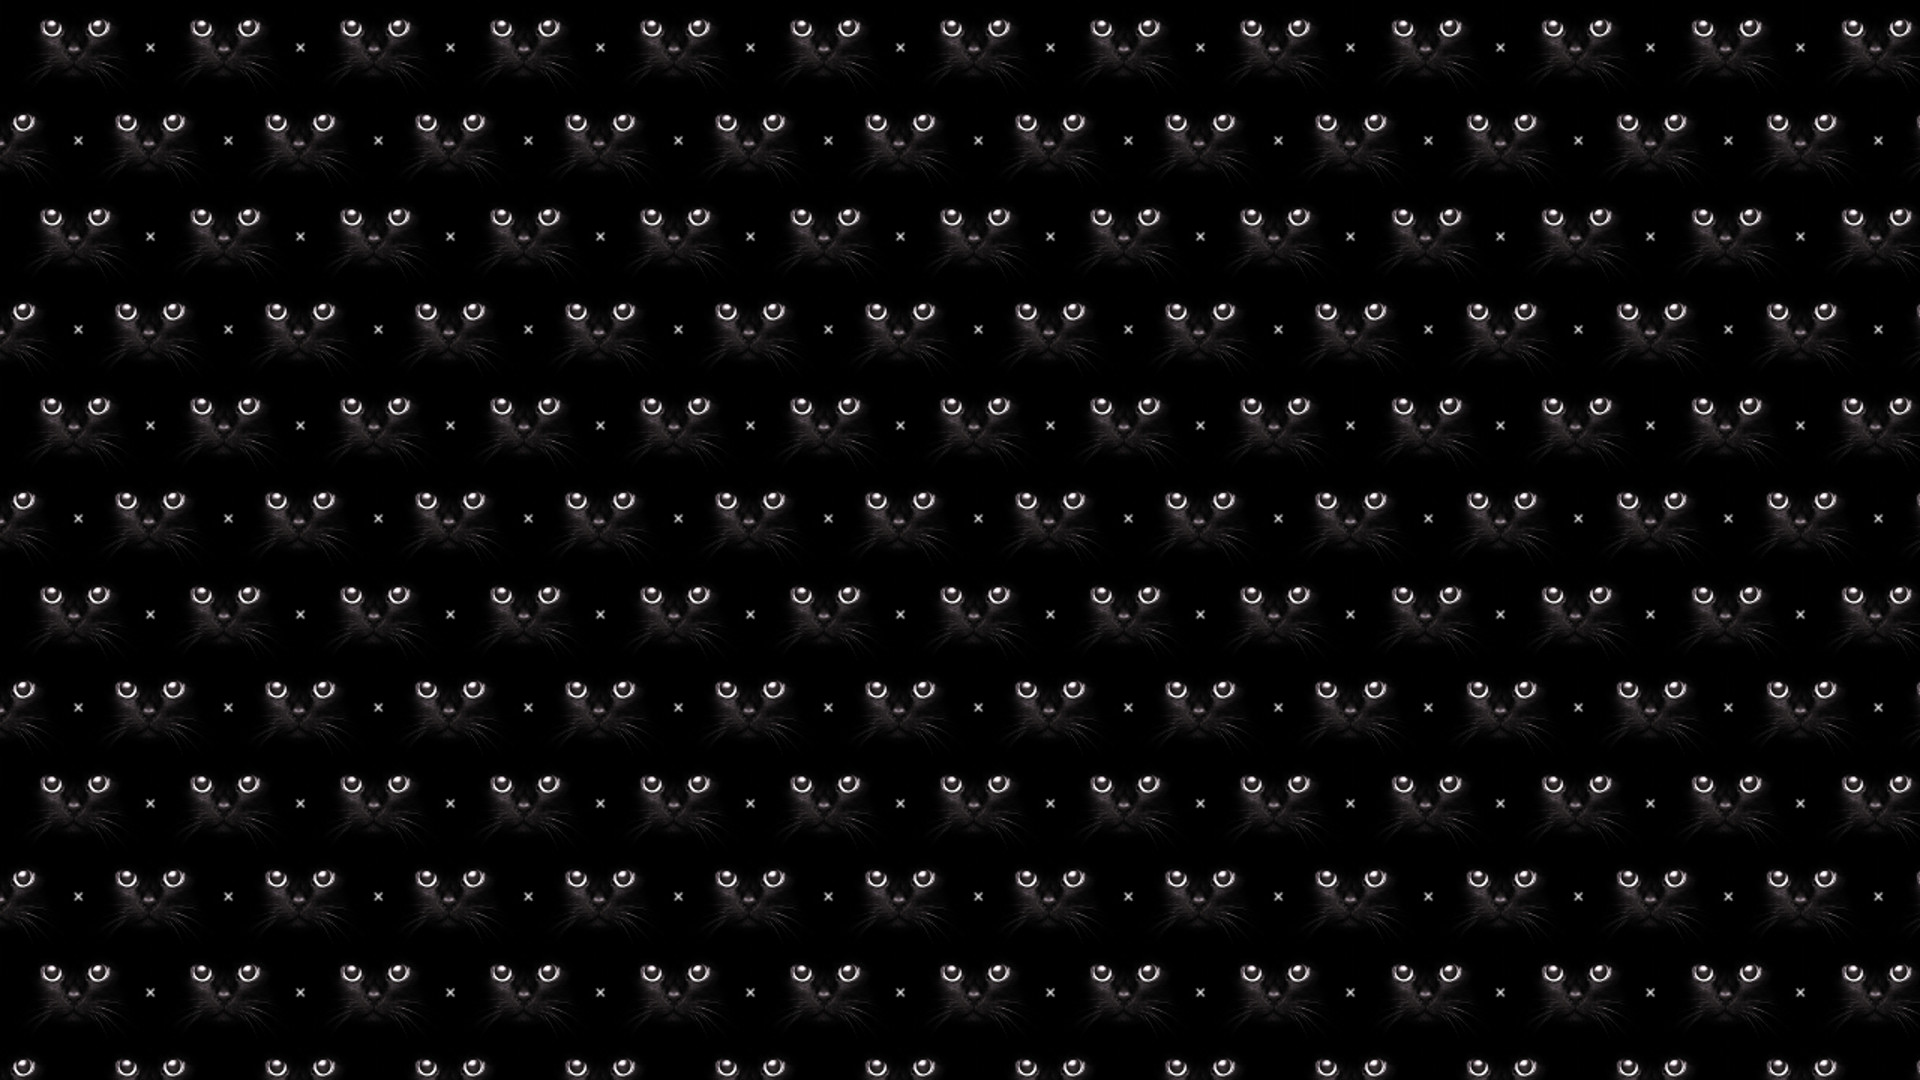 1920x1080 Black cat face pattern on a black background [1920 x 1080] ...